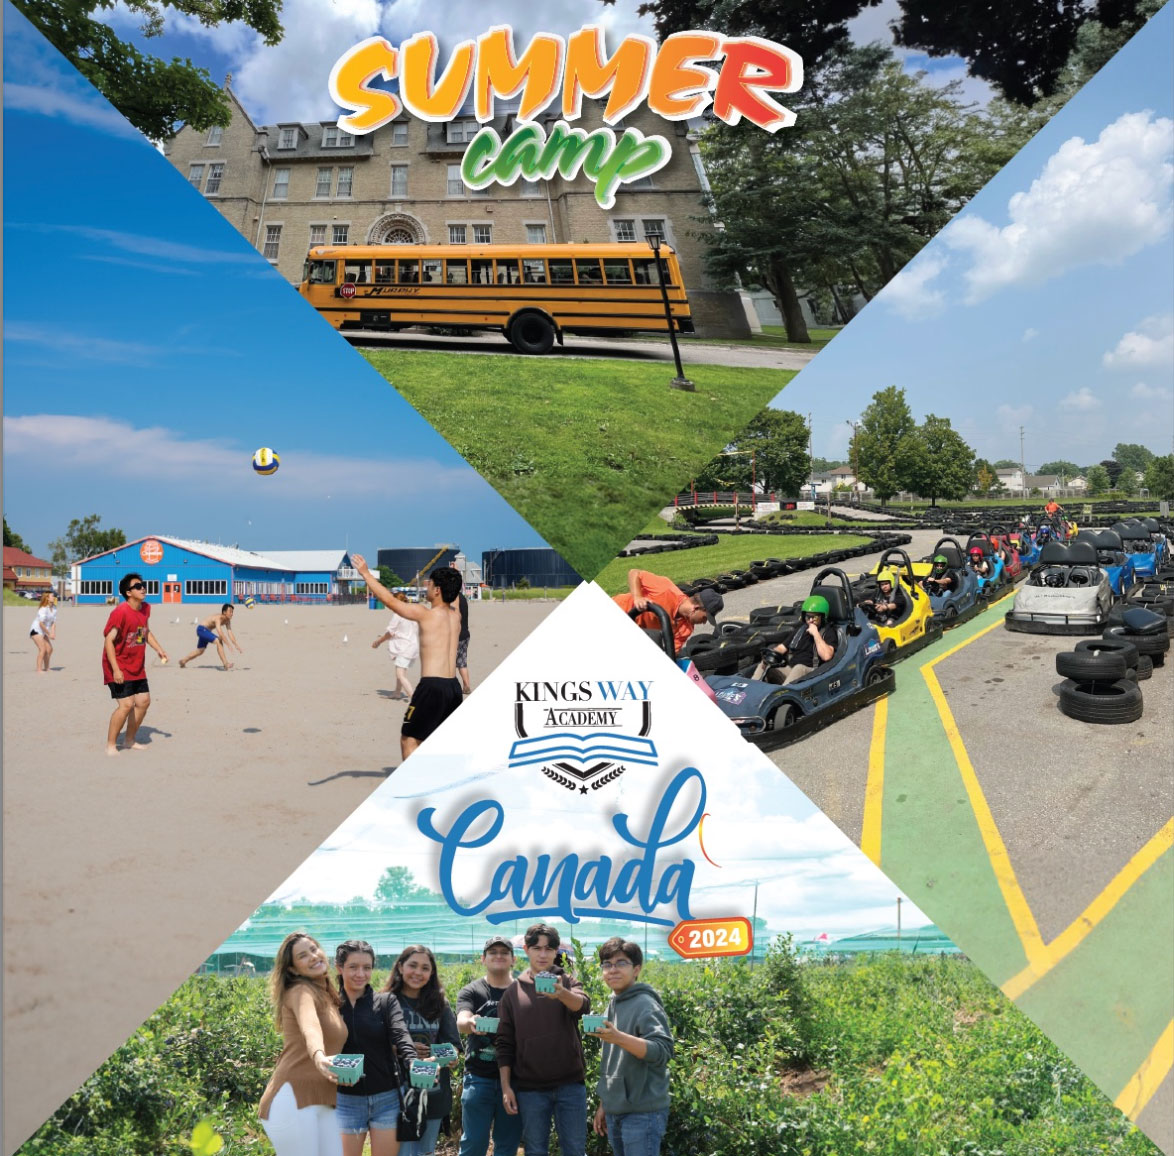 Summer-Camp-Canada-kingsway-academy-2024